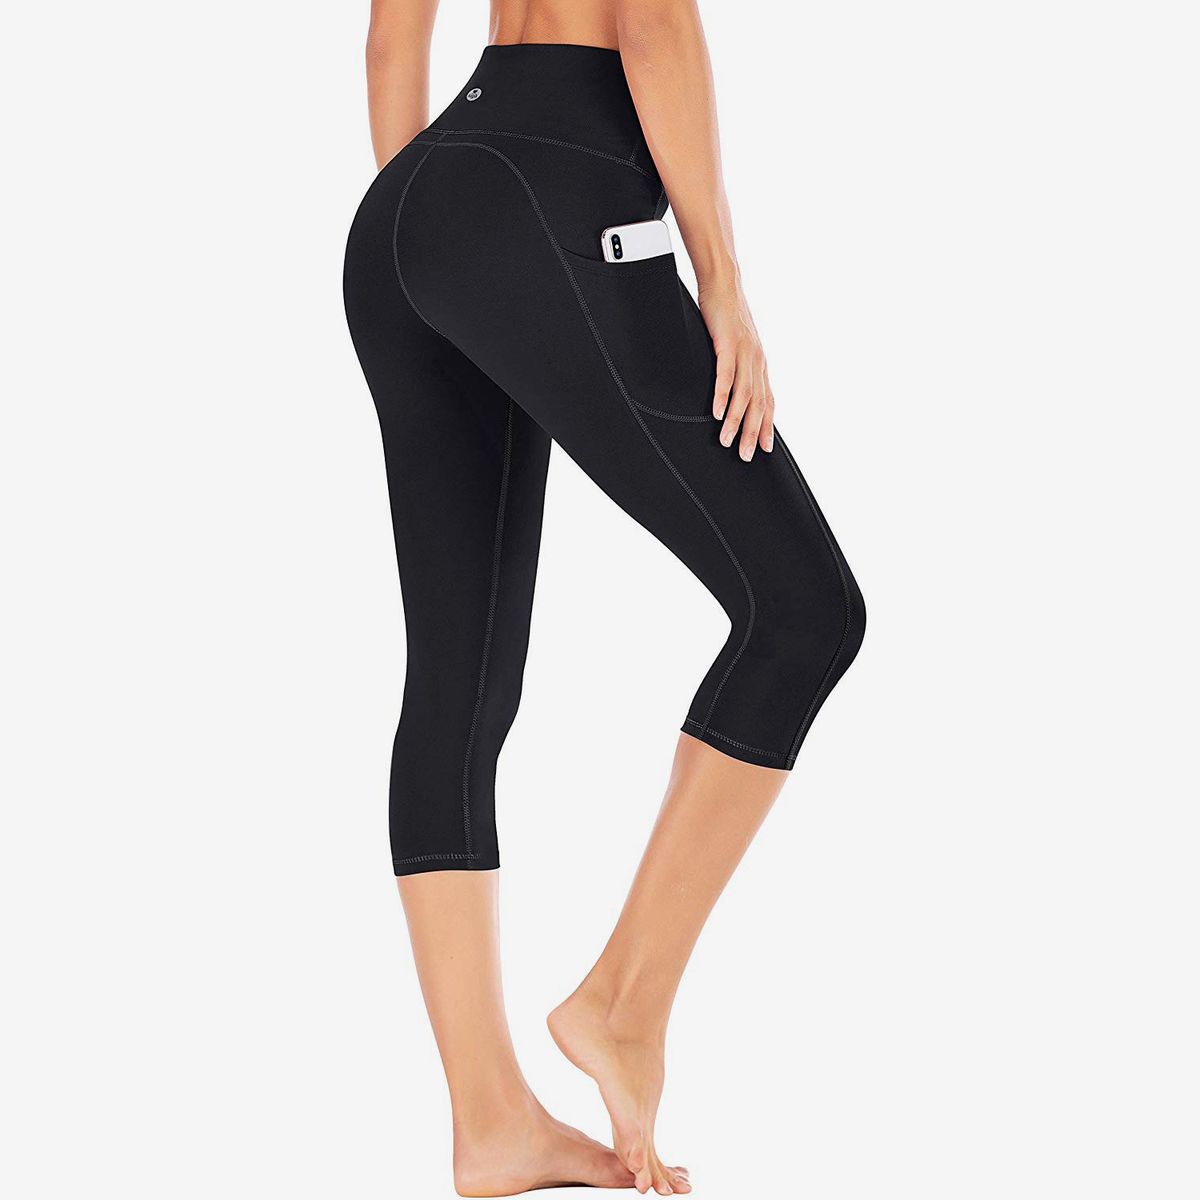 Women's Yoga Sports Long High Waist with Pockets Yoga Pants Leggings Pants Gifts 